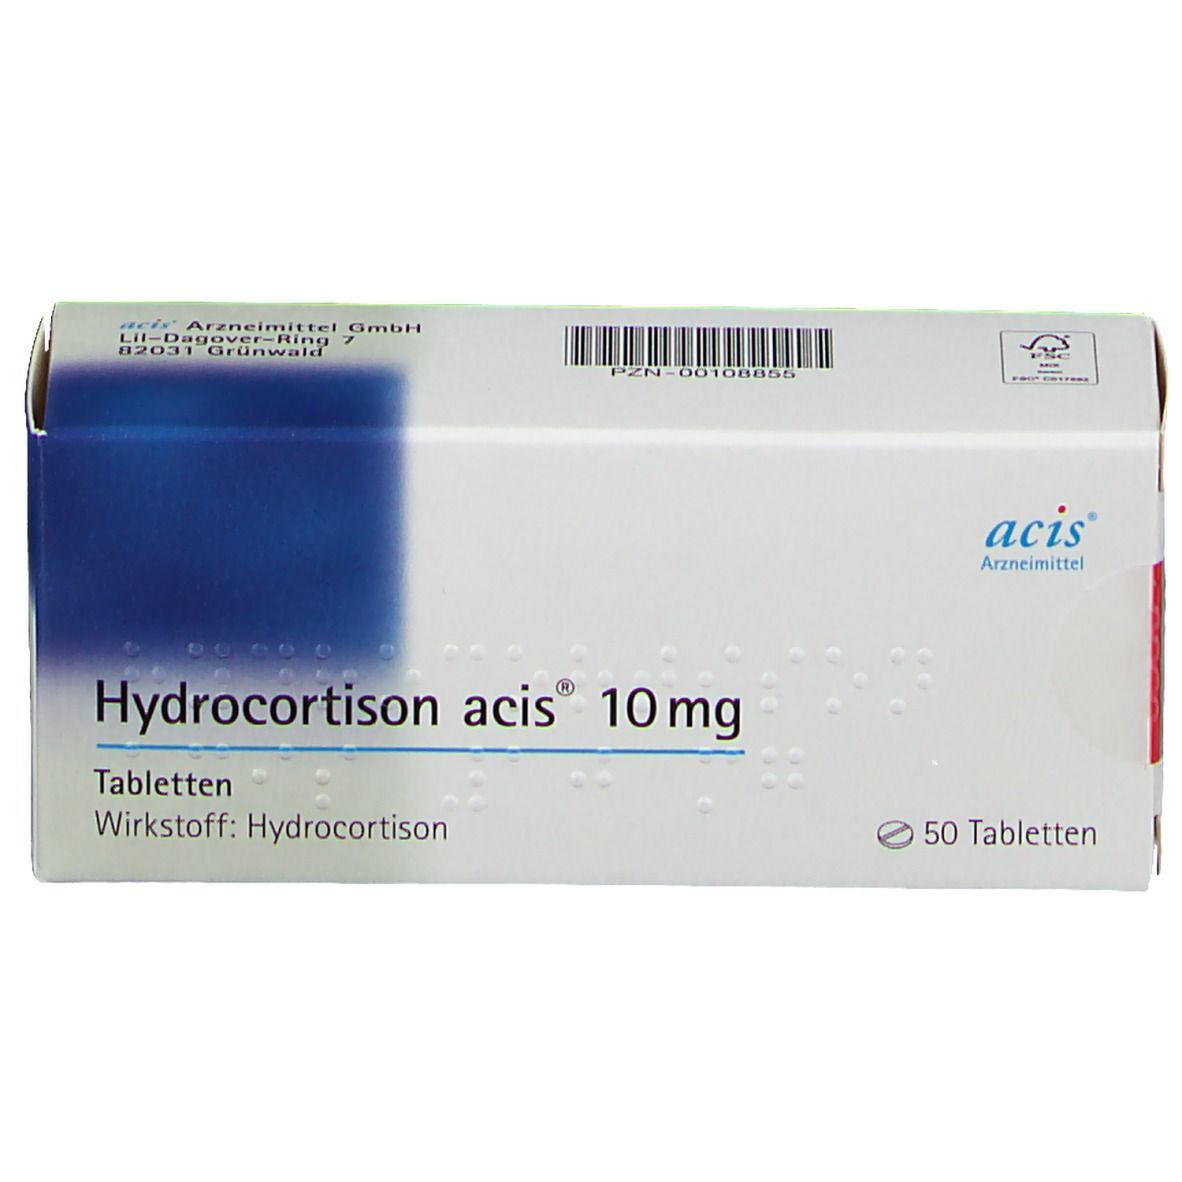 Hydrocortison acis® 10Mg